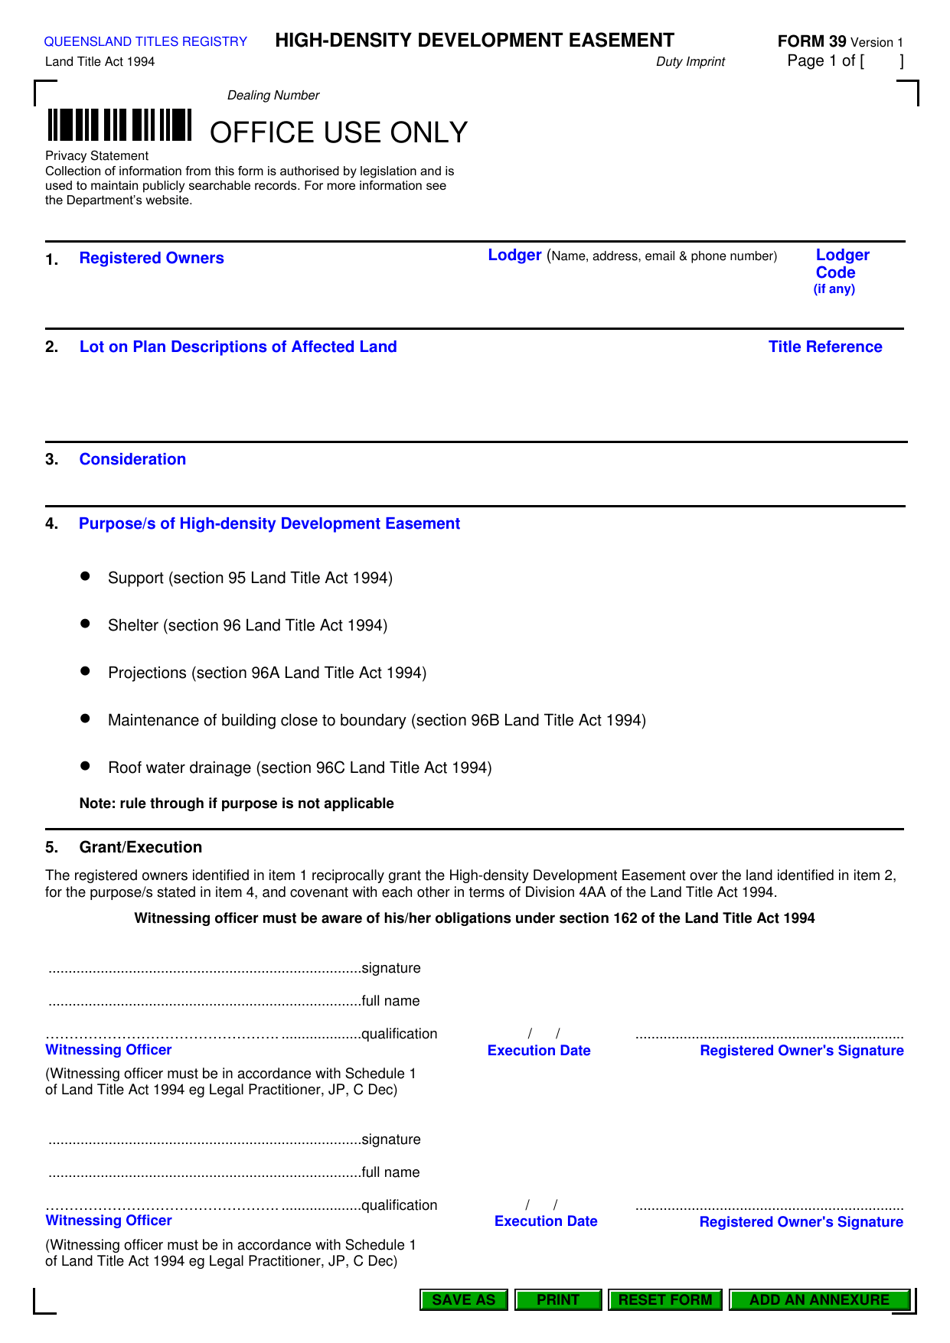 Form 39 High-Density Development Easement - Queensland, Australia, Page 1